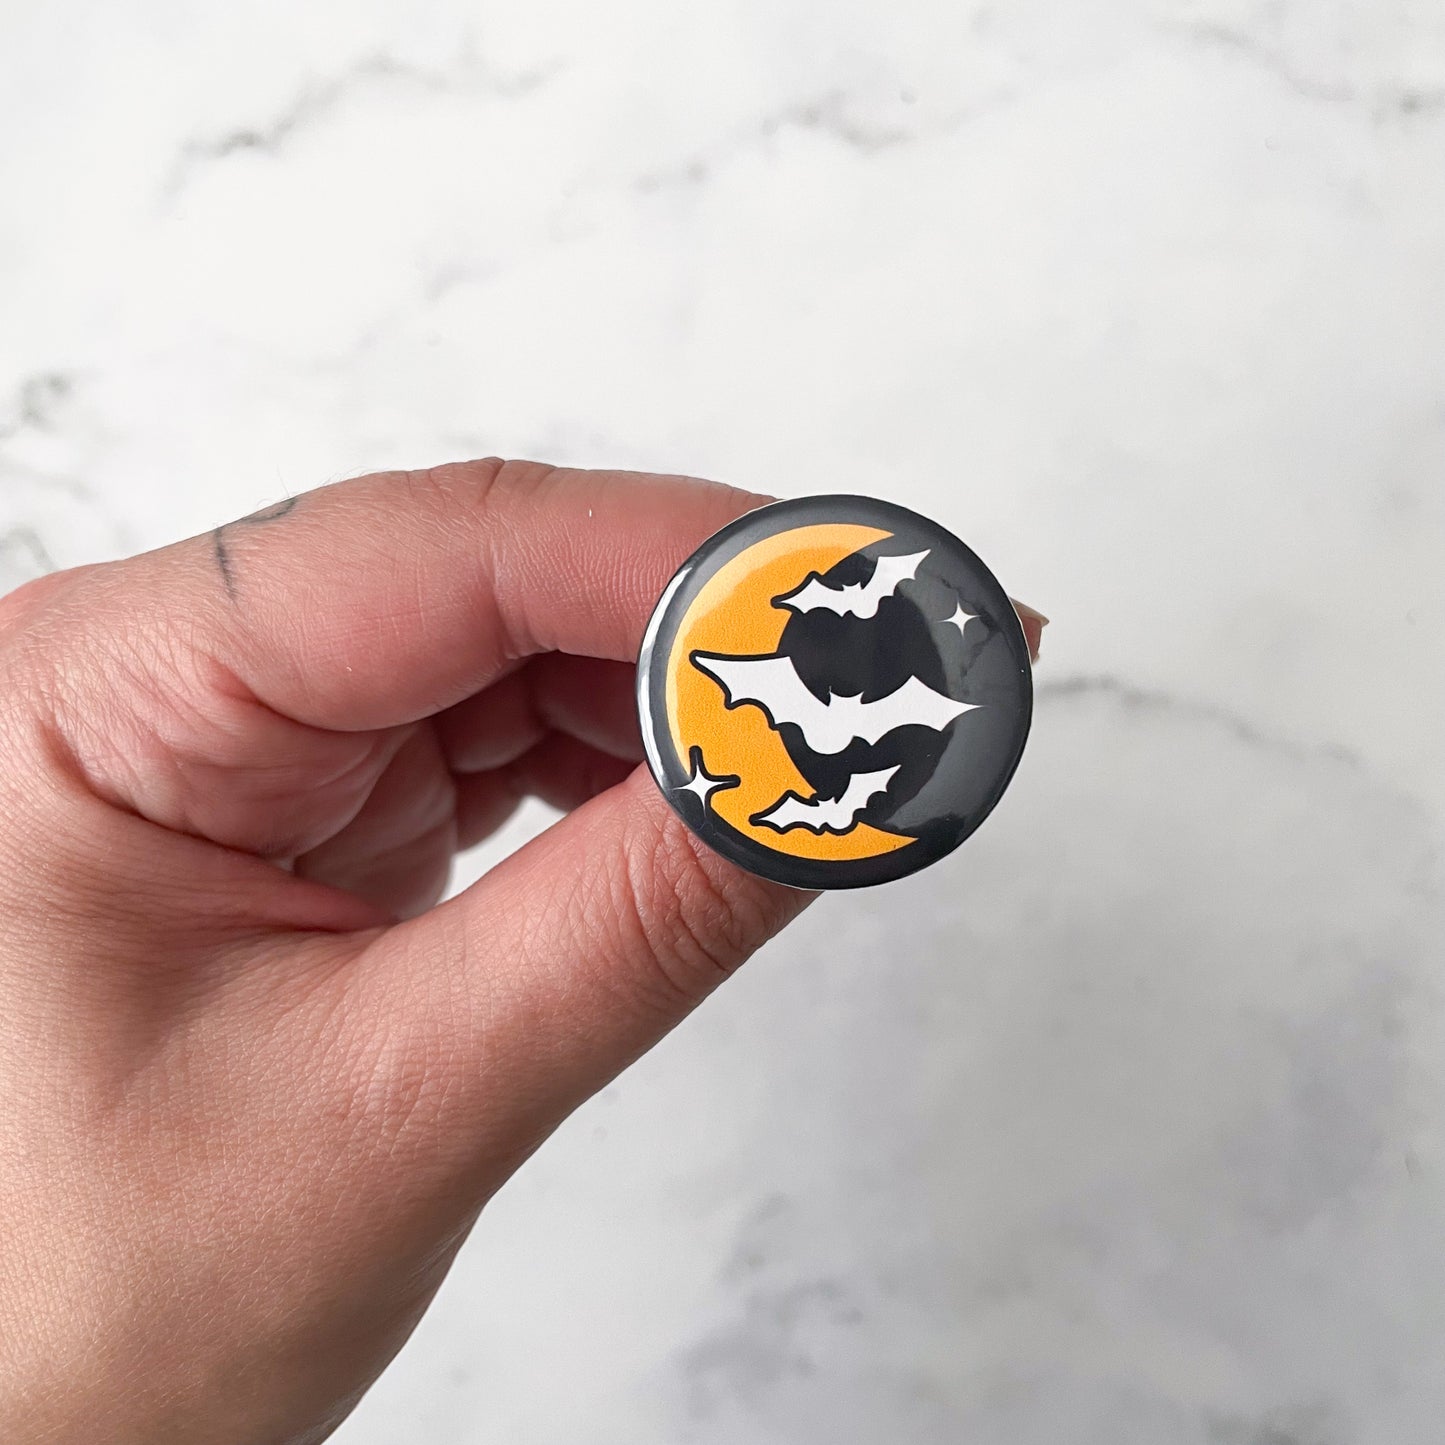 Halloween Button / Badge Pack